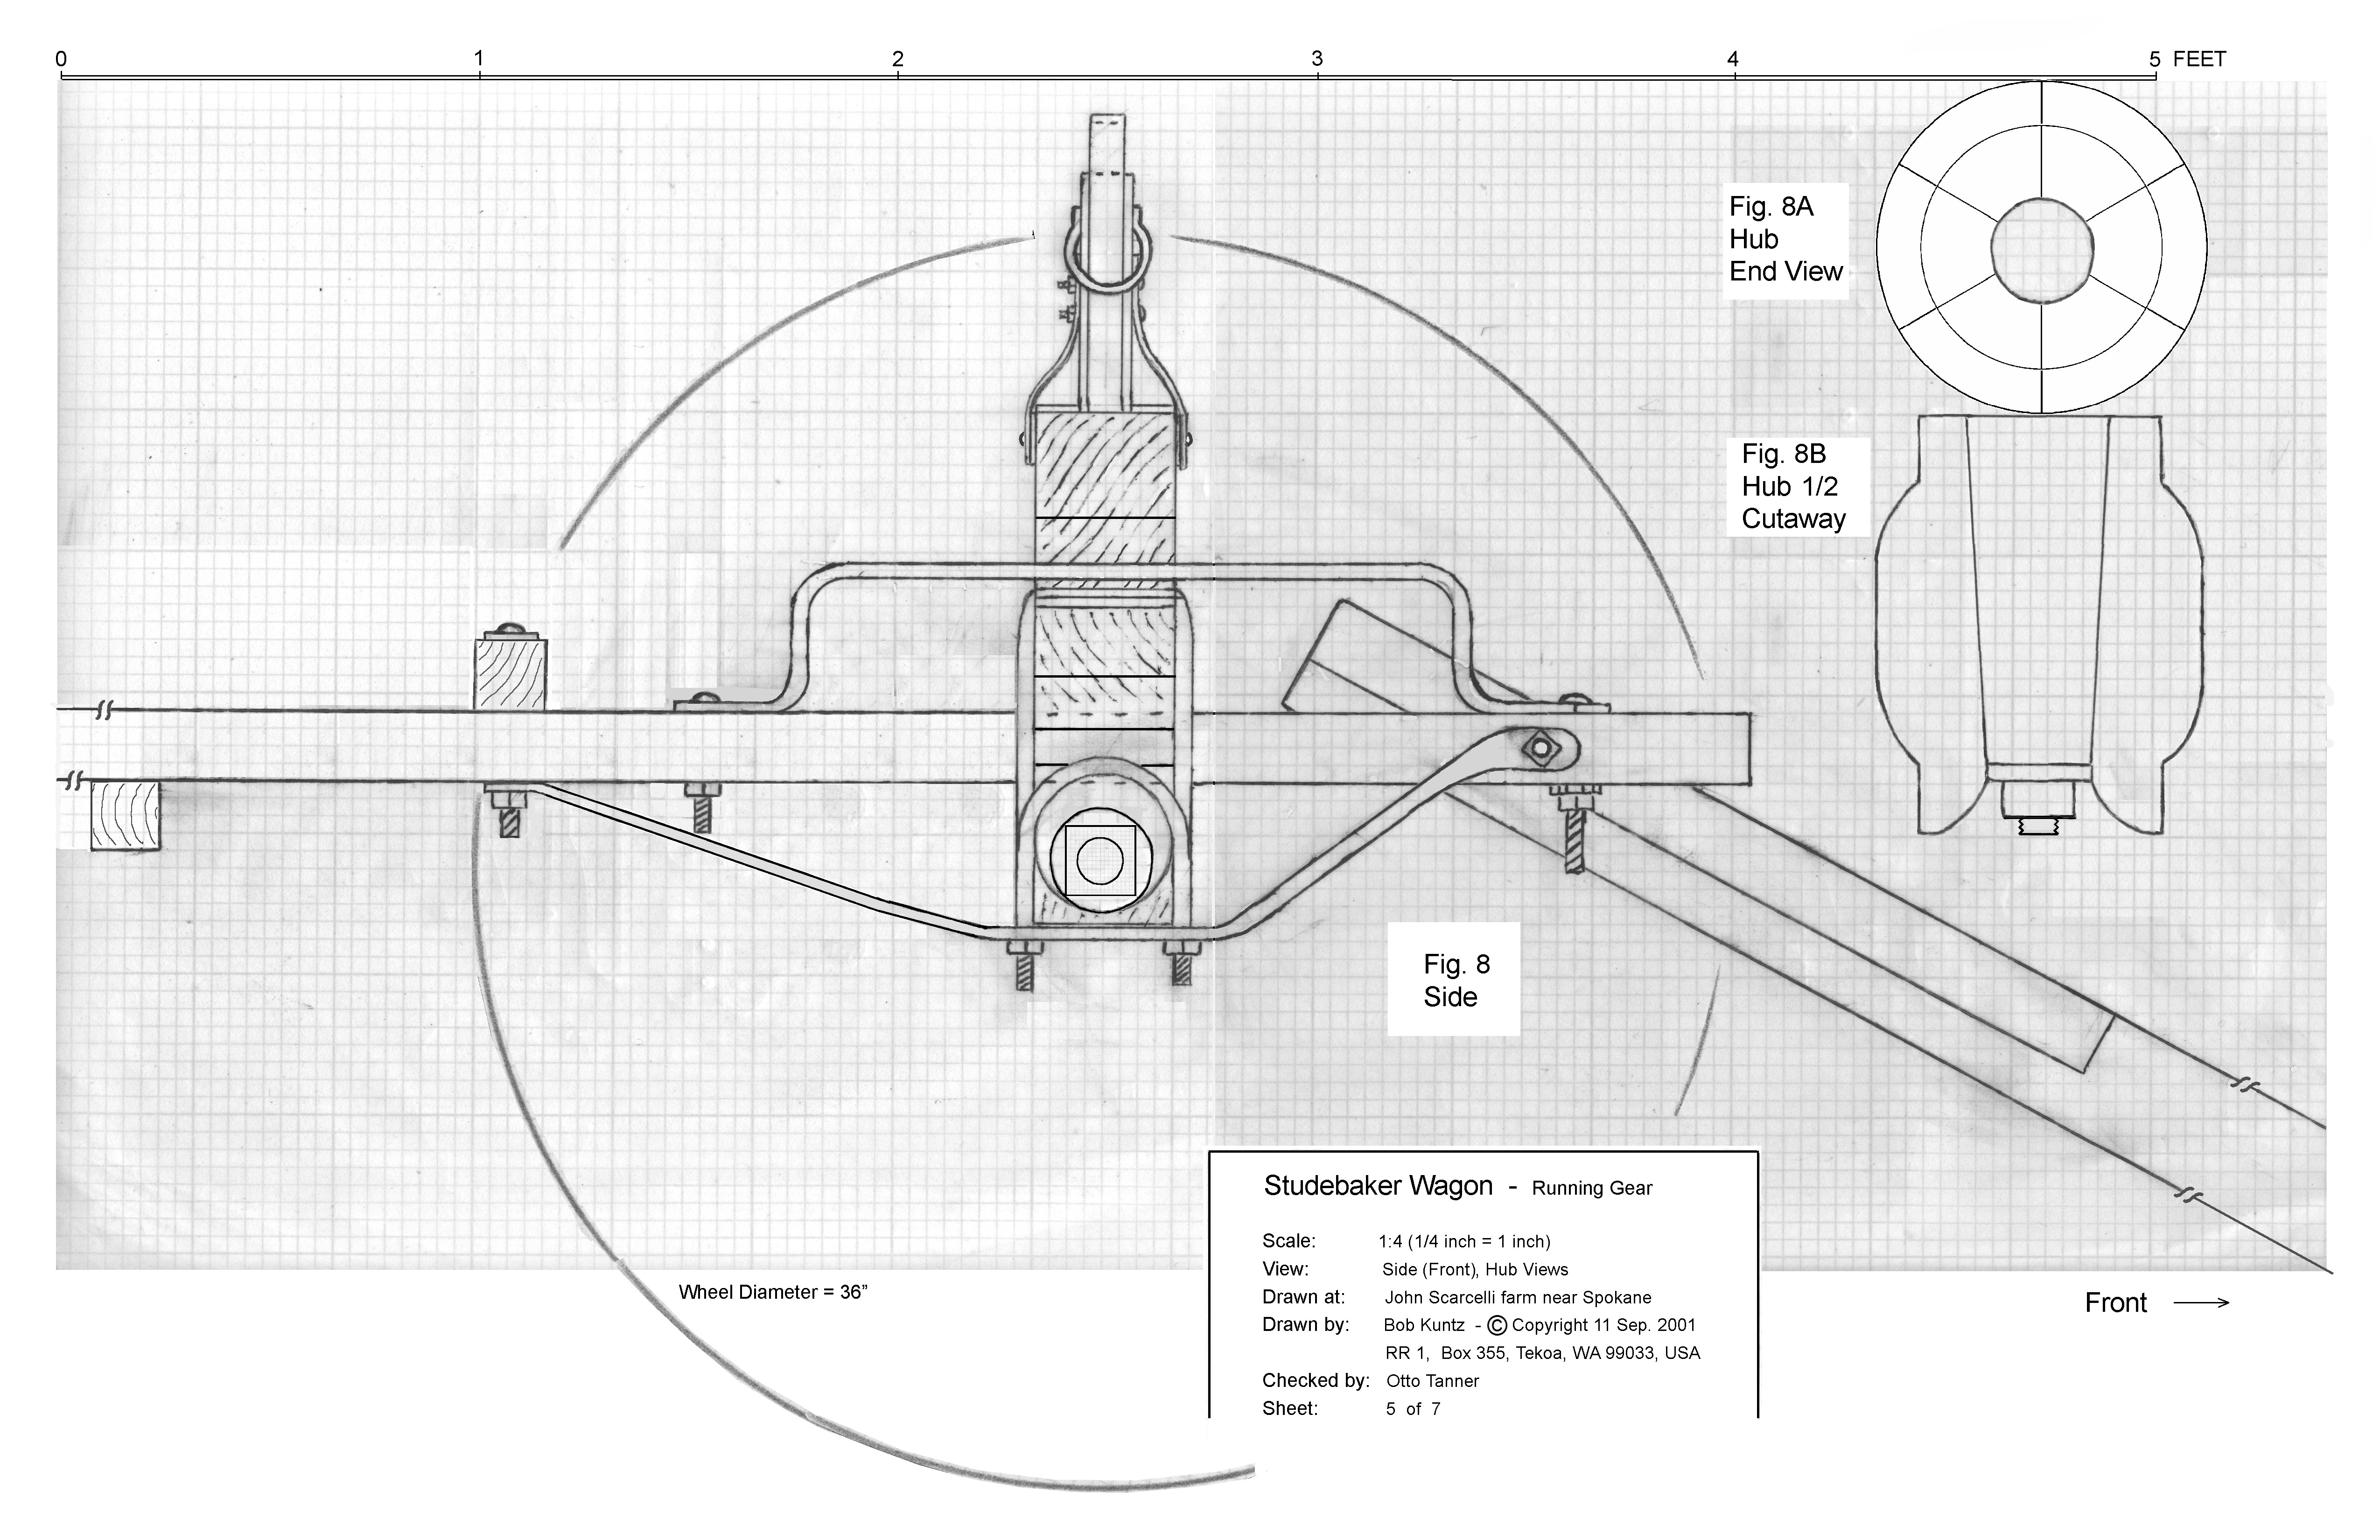 Studebaker Wagon Plans - Sheet 5 